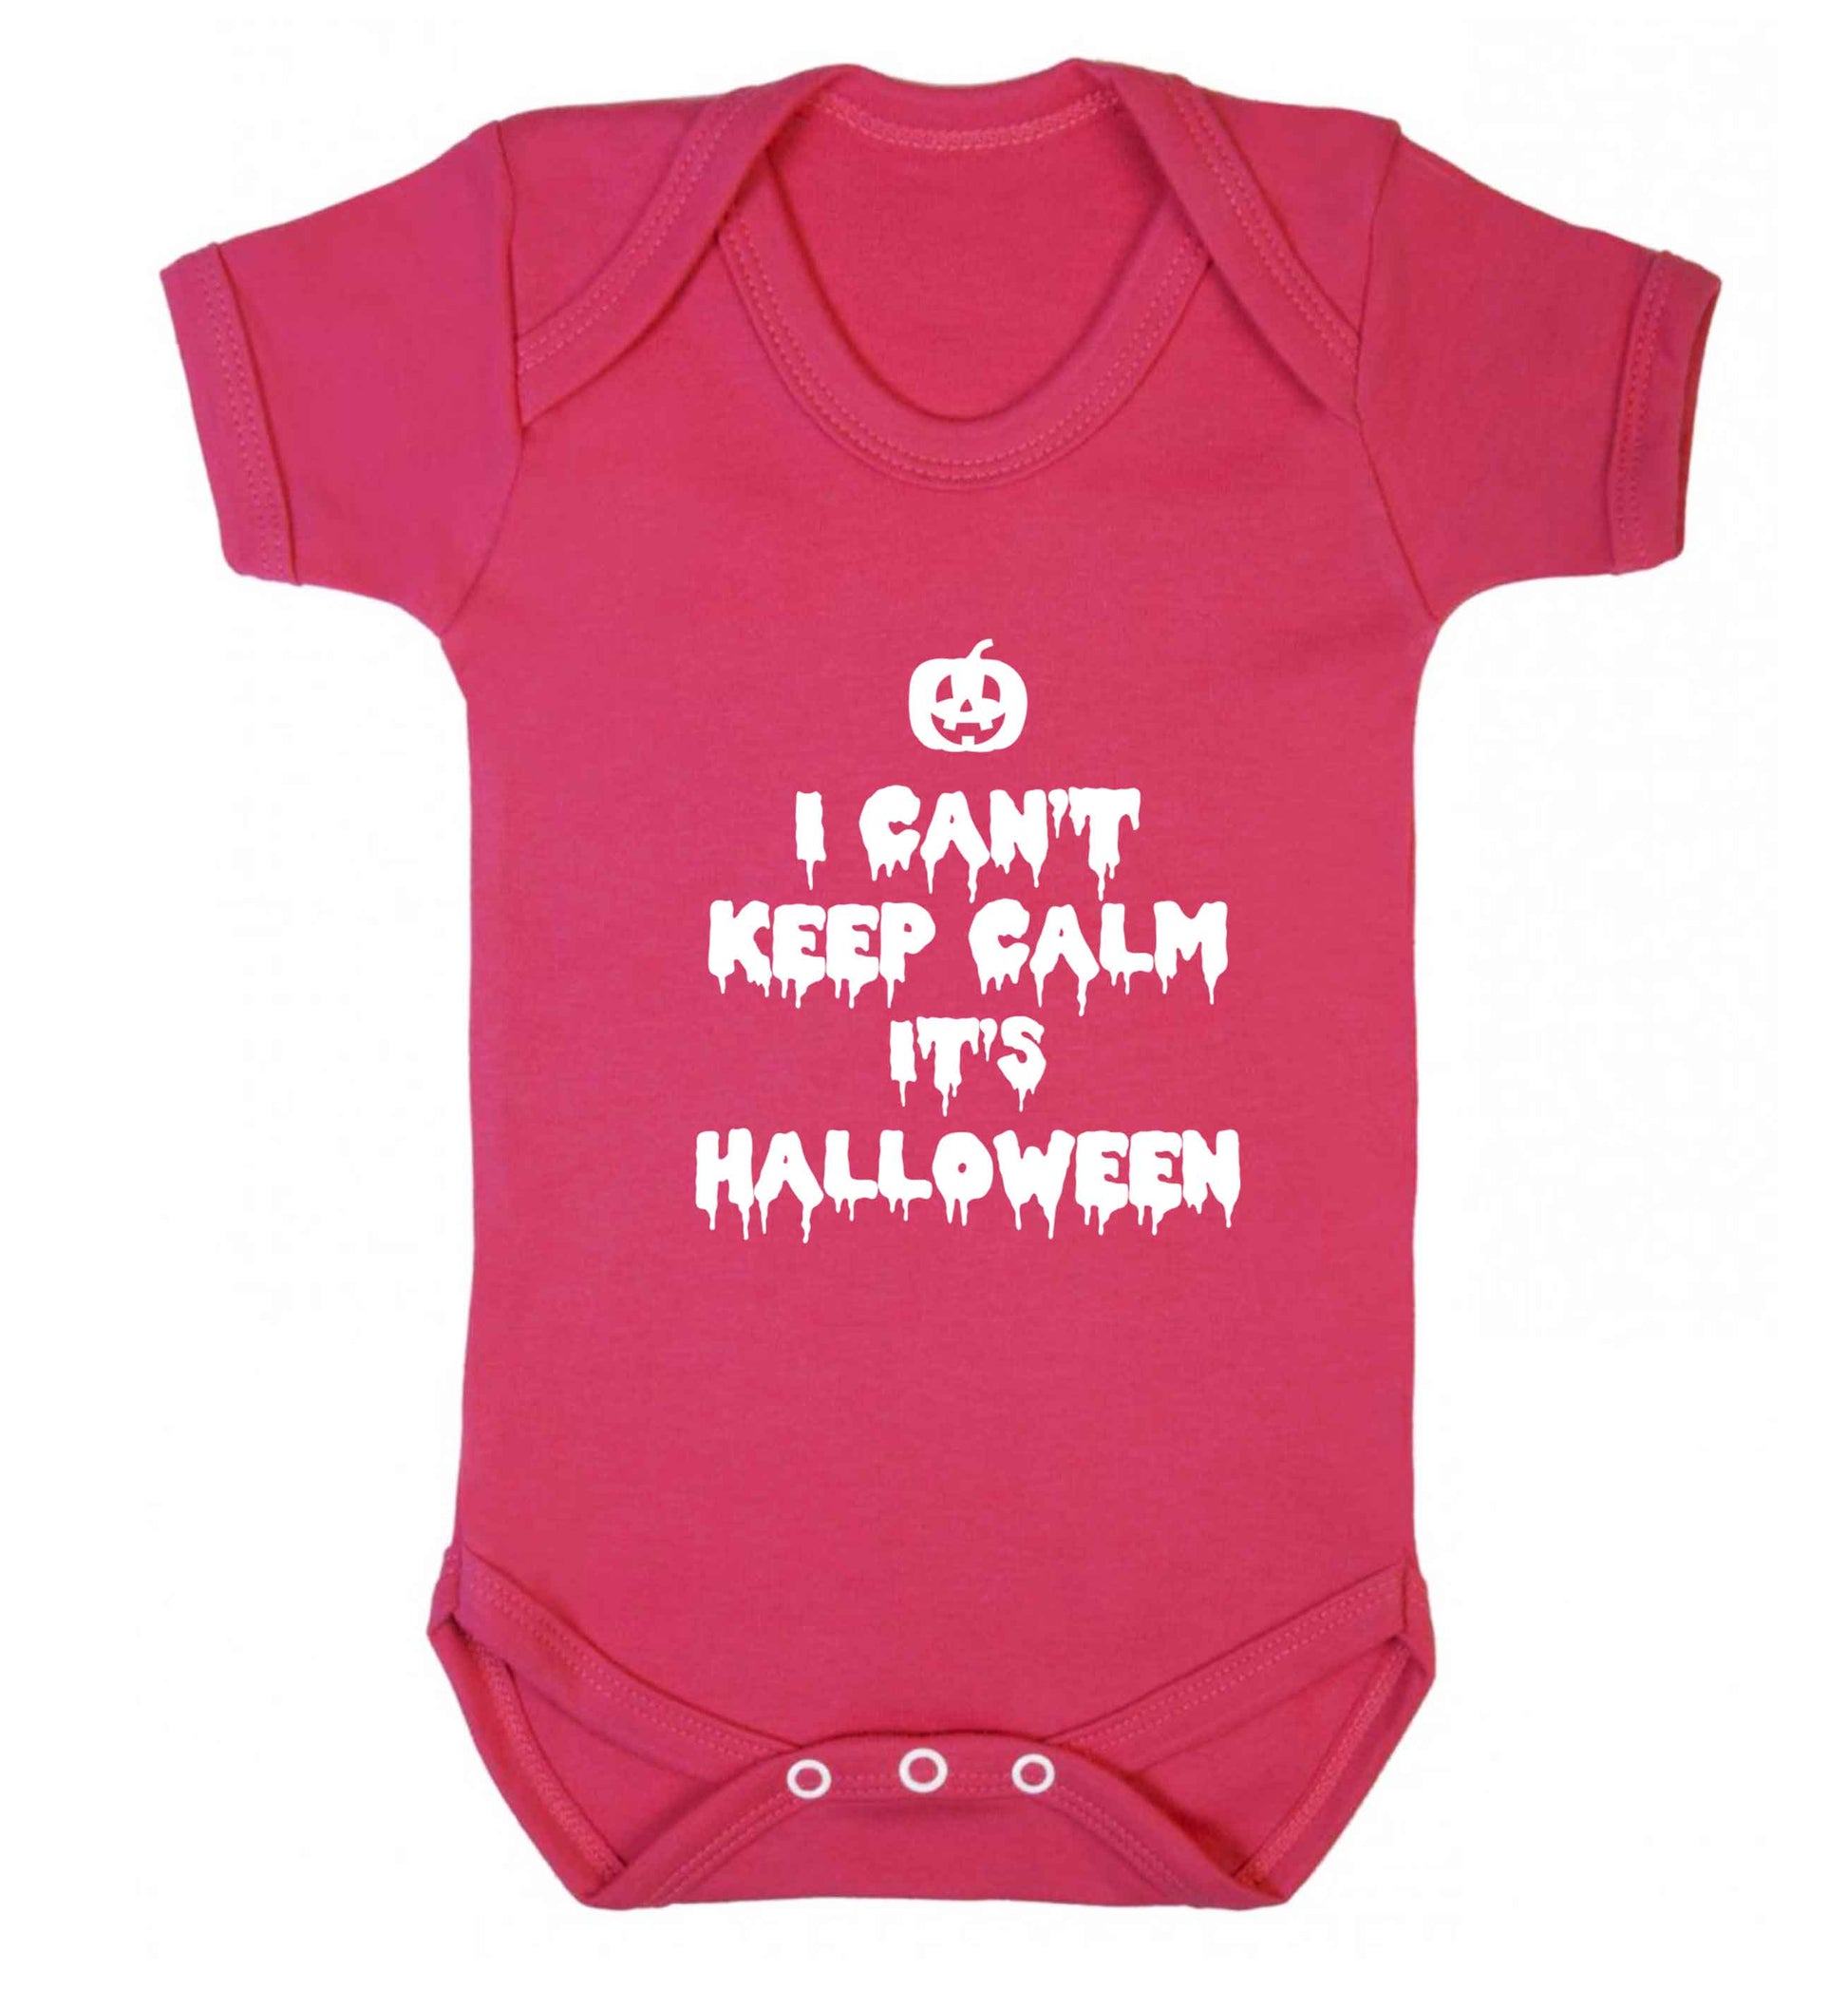 I can't keep calm it's halloween baby vest dark pink 18-24 months